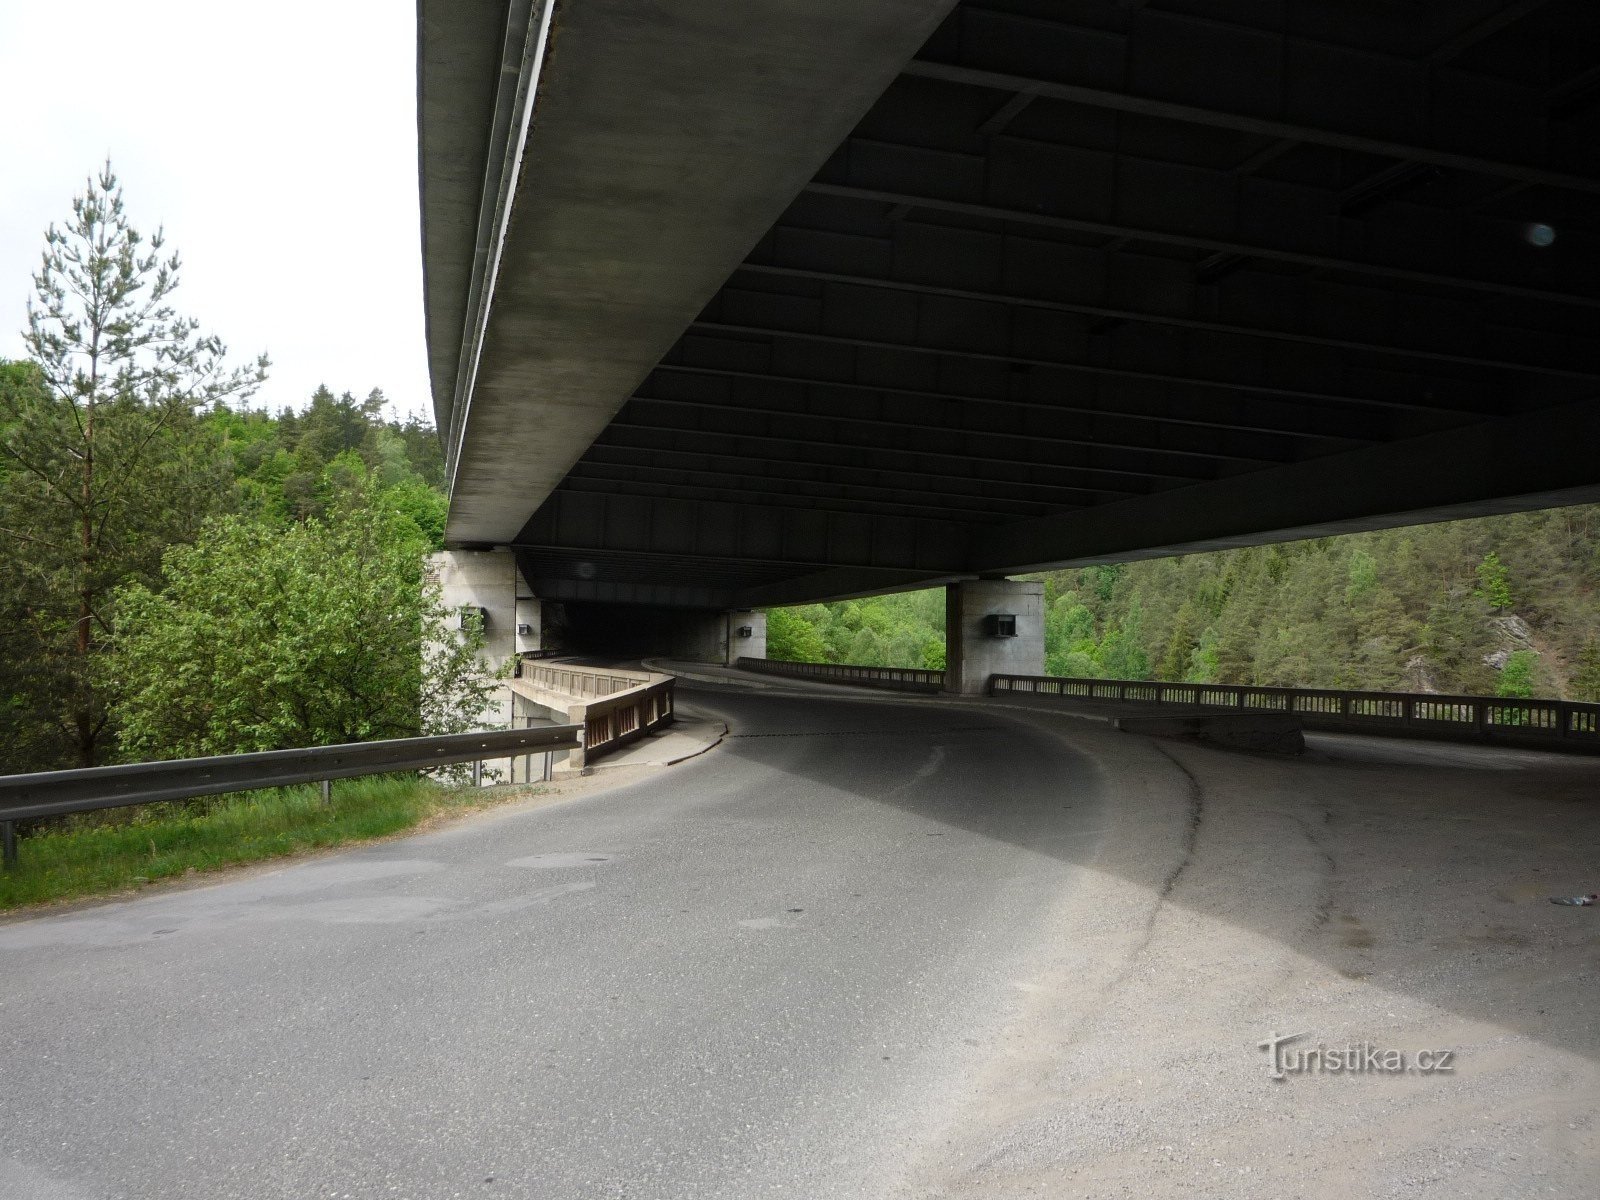 Pišt - διπλή γέφυρα αυτοκινητόδρομου (PE)